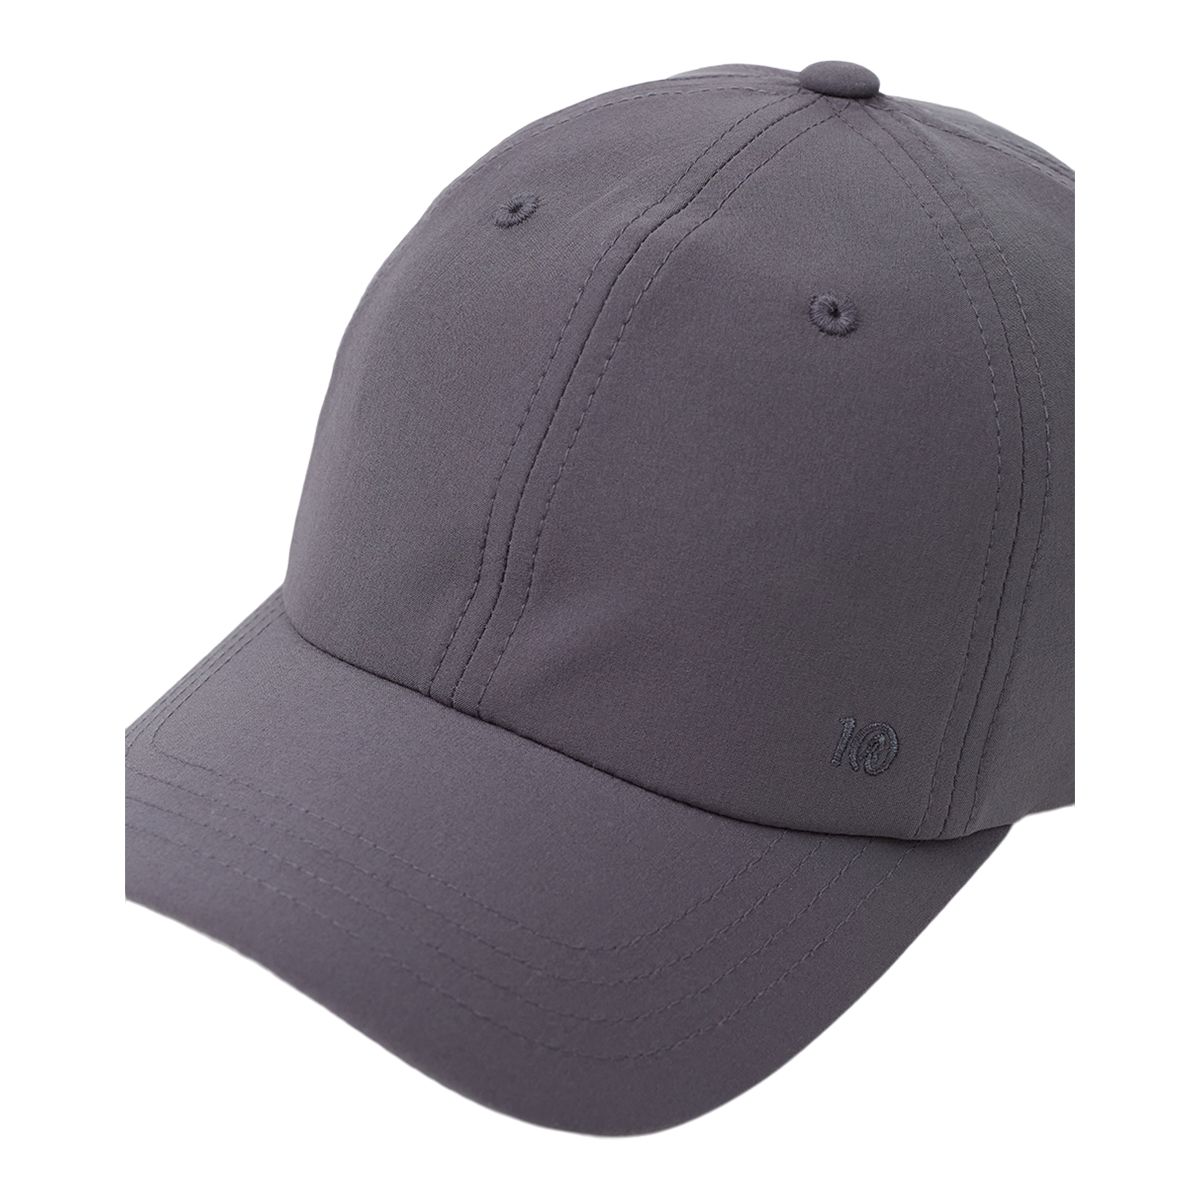 Tentree Women's Destination Peak Strapback Hat